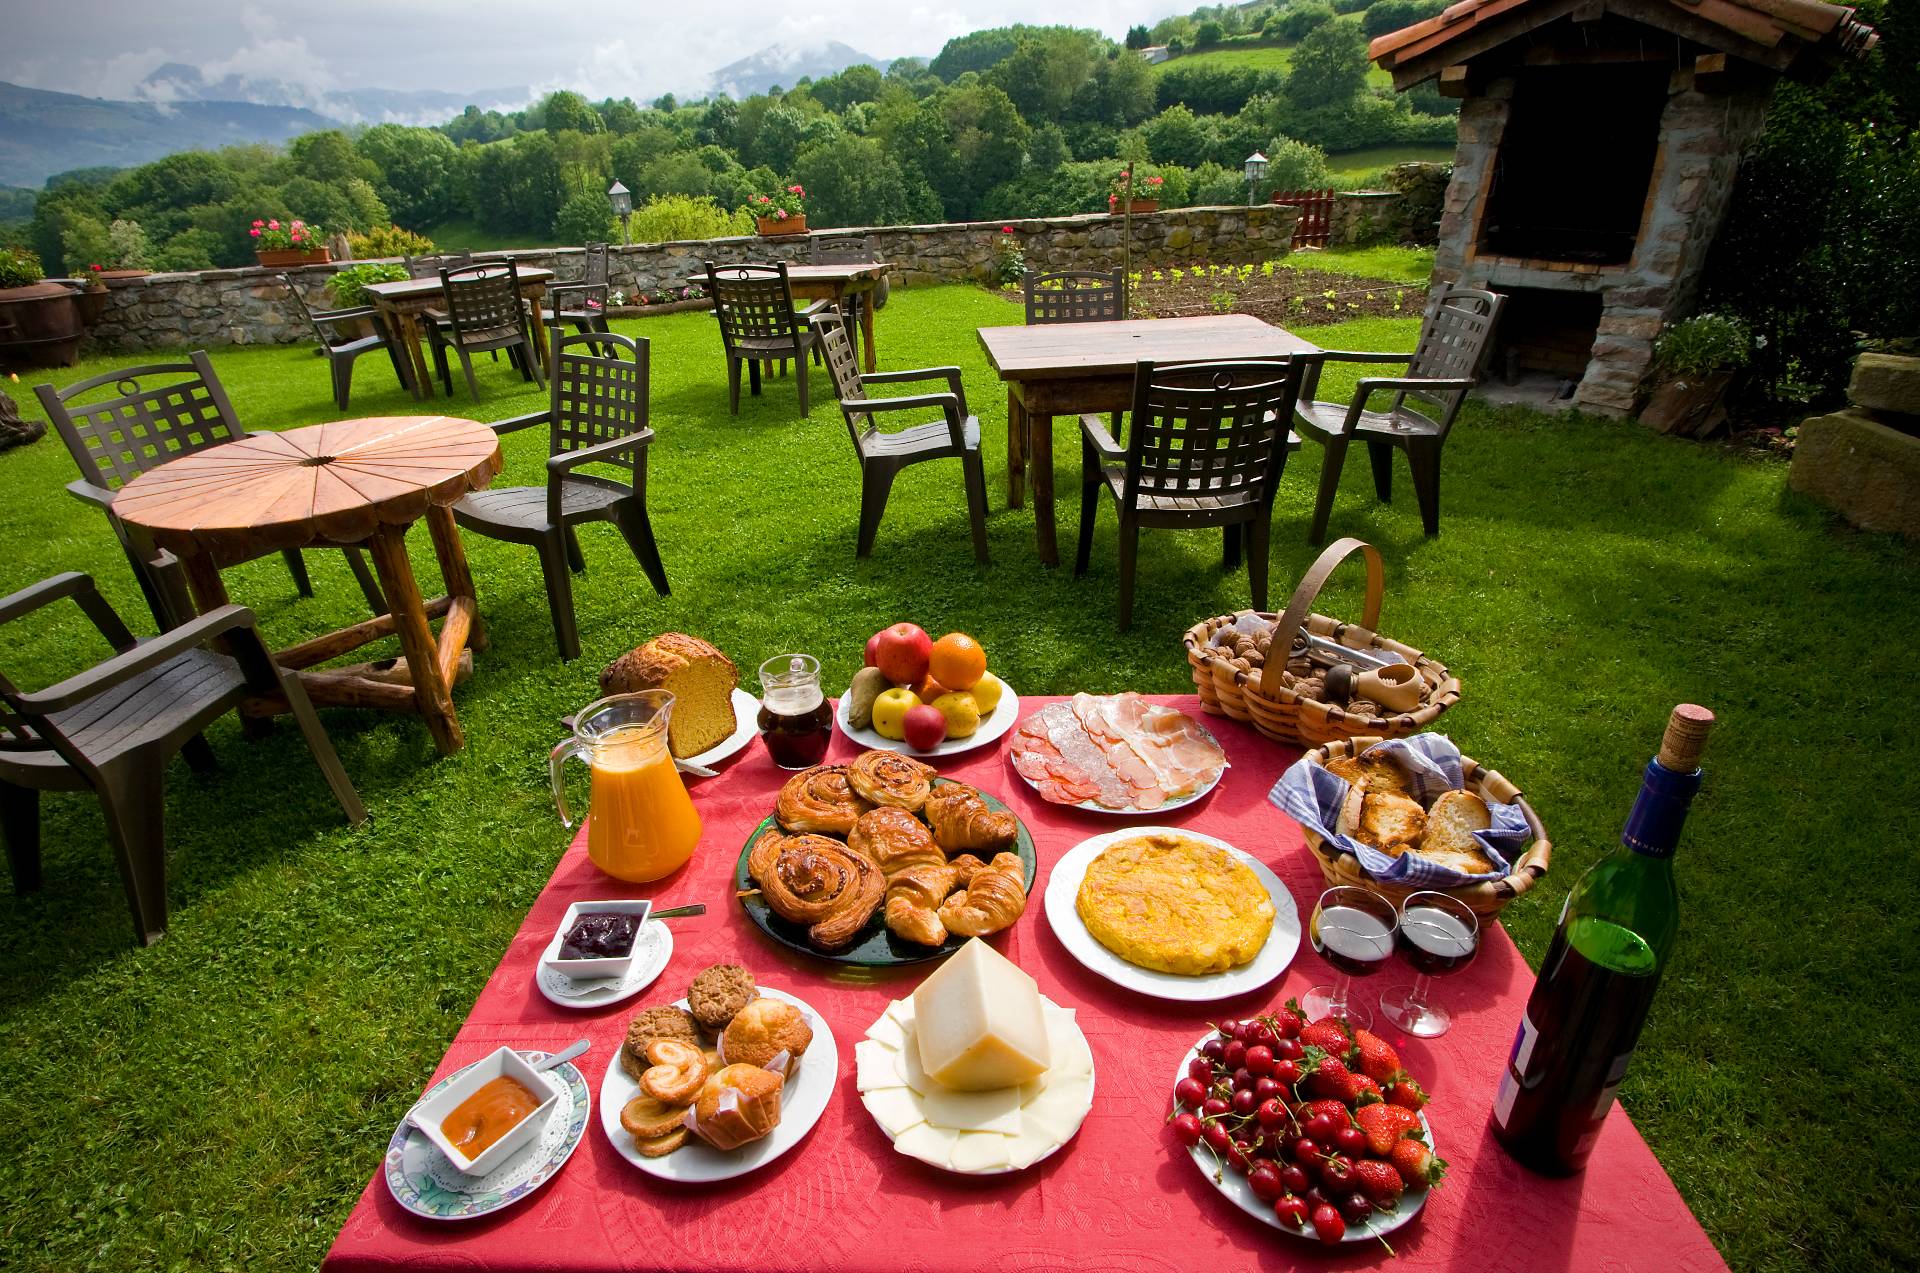 Table in the garden prepared for breakfast in Baztan